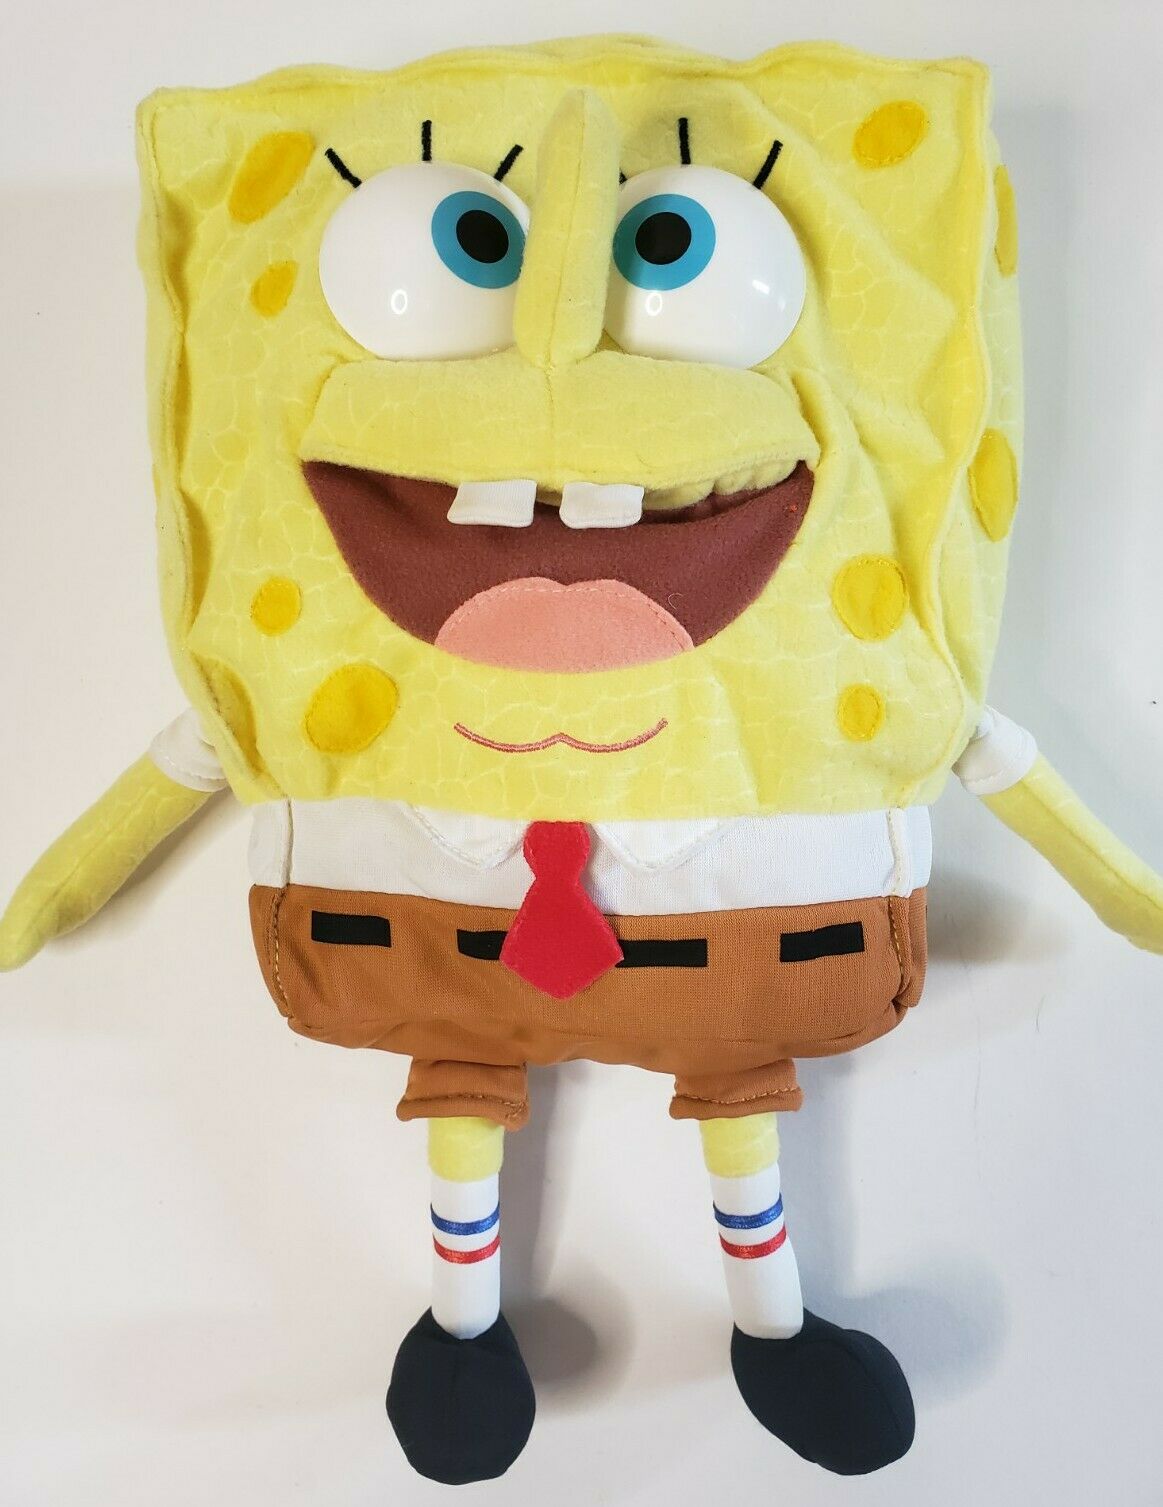 Spongebob Squarepants 12" Plush Stuffed Toy Mattel 2000 *talking Does Not Work